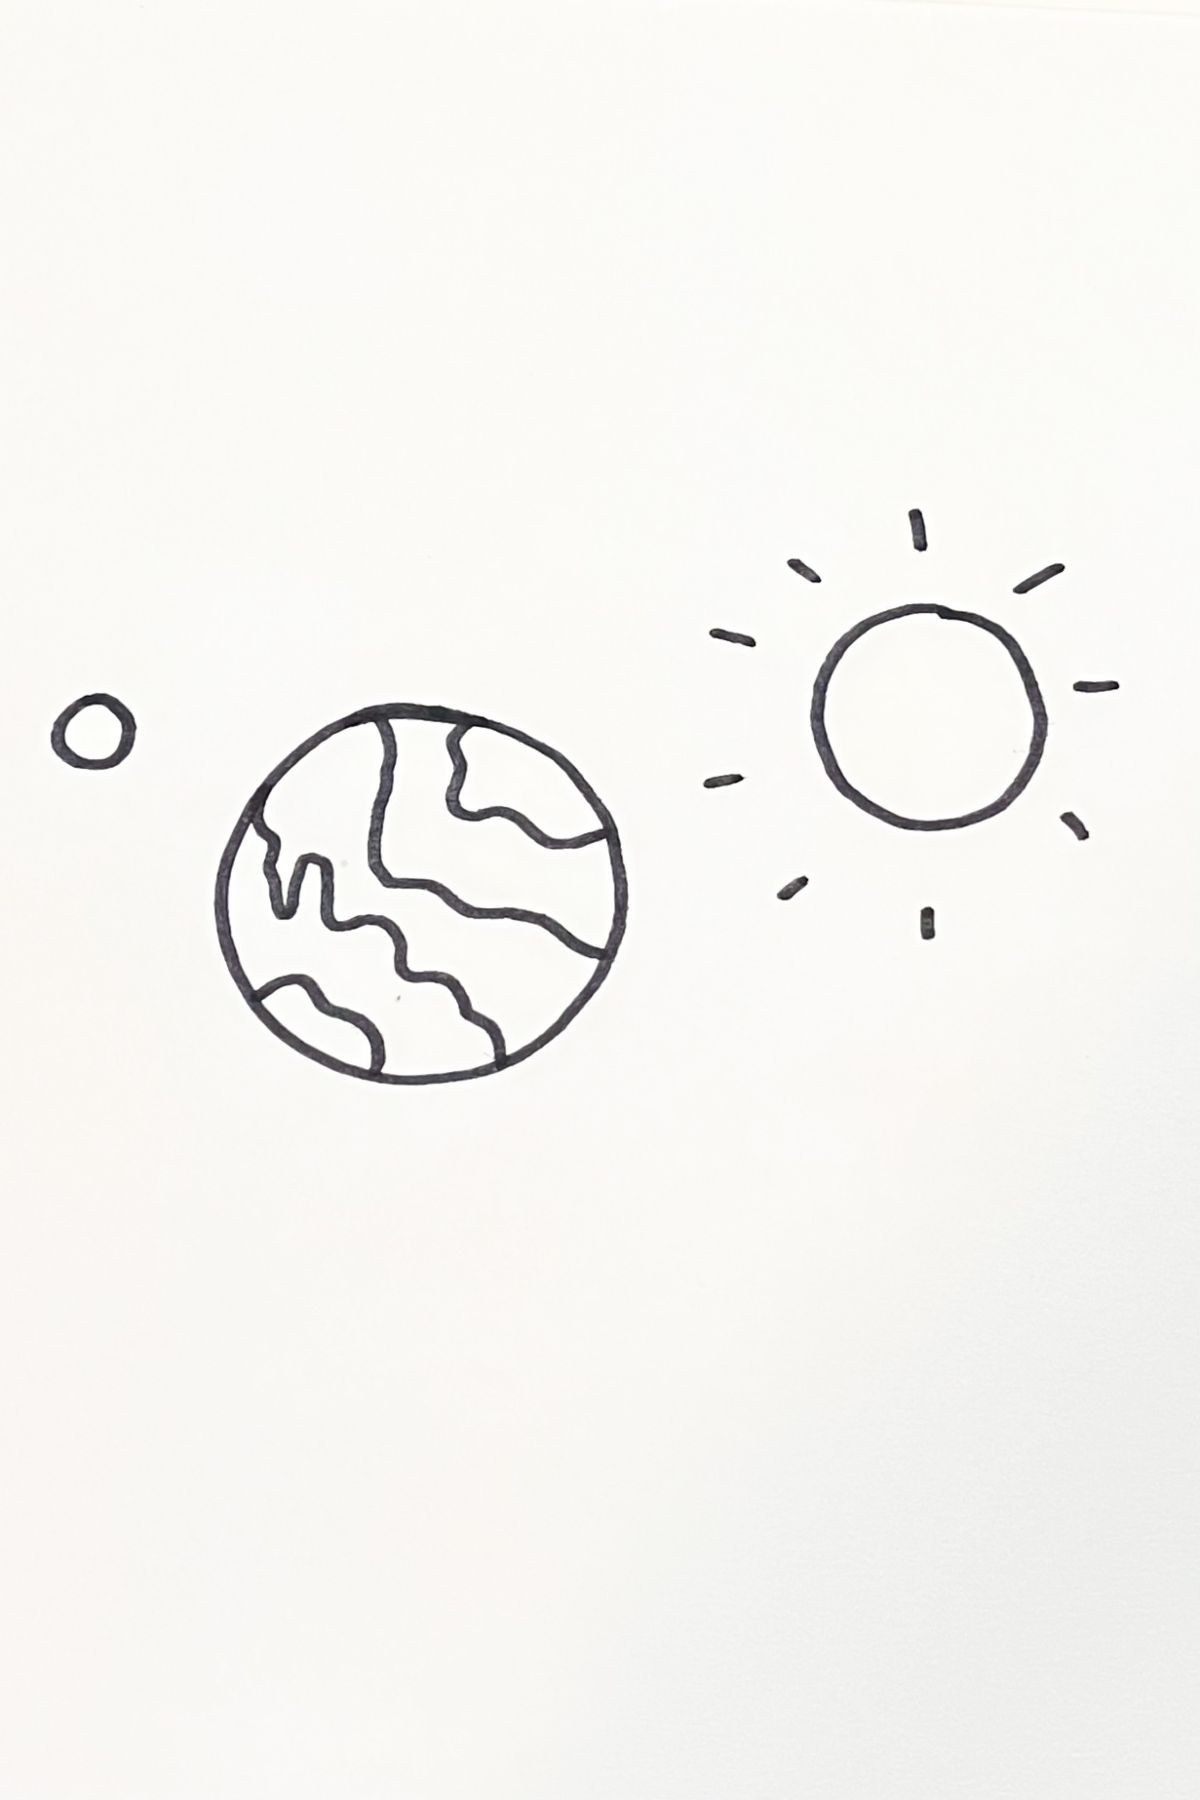 Earth sun and moon drawing idea